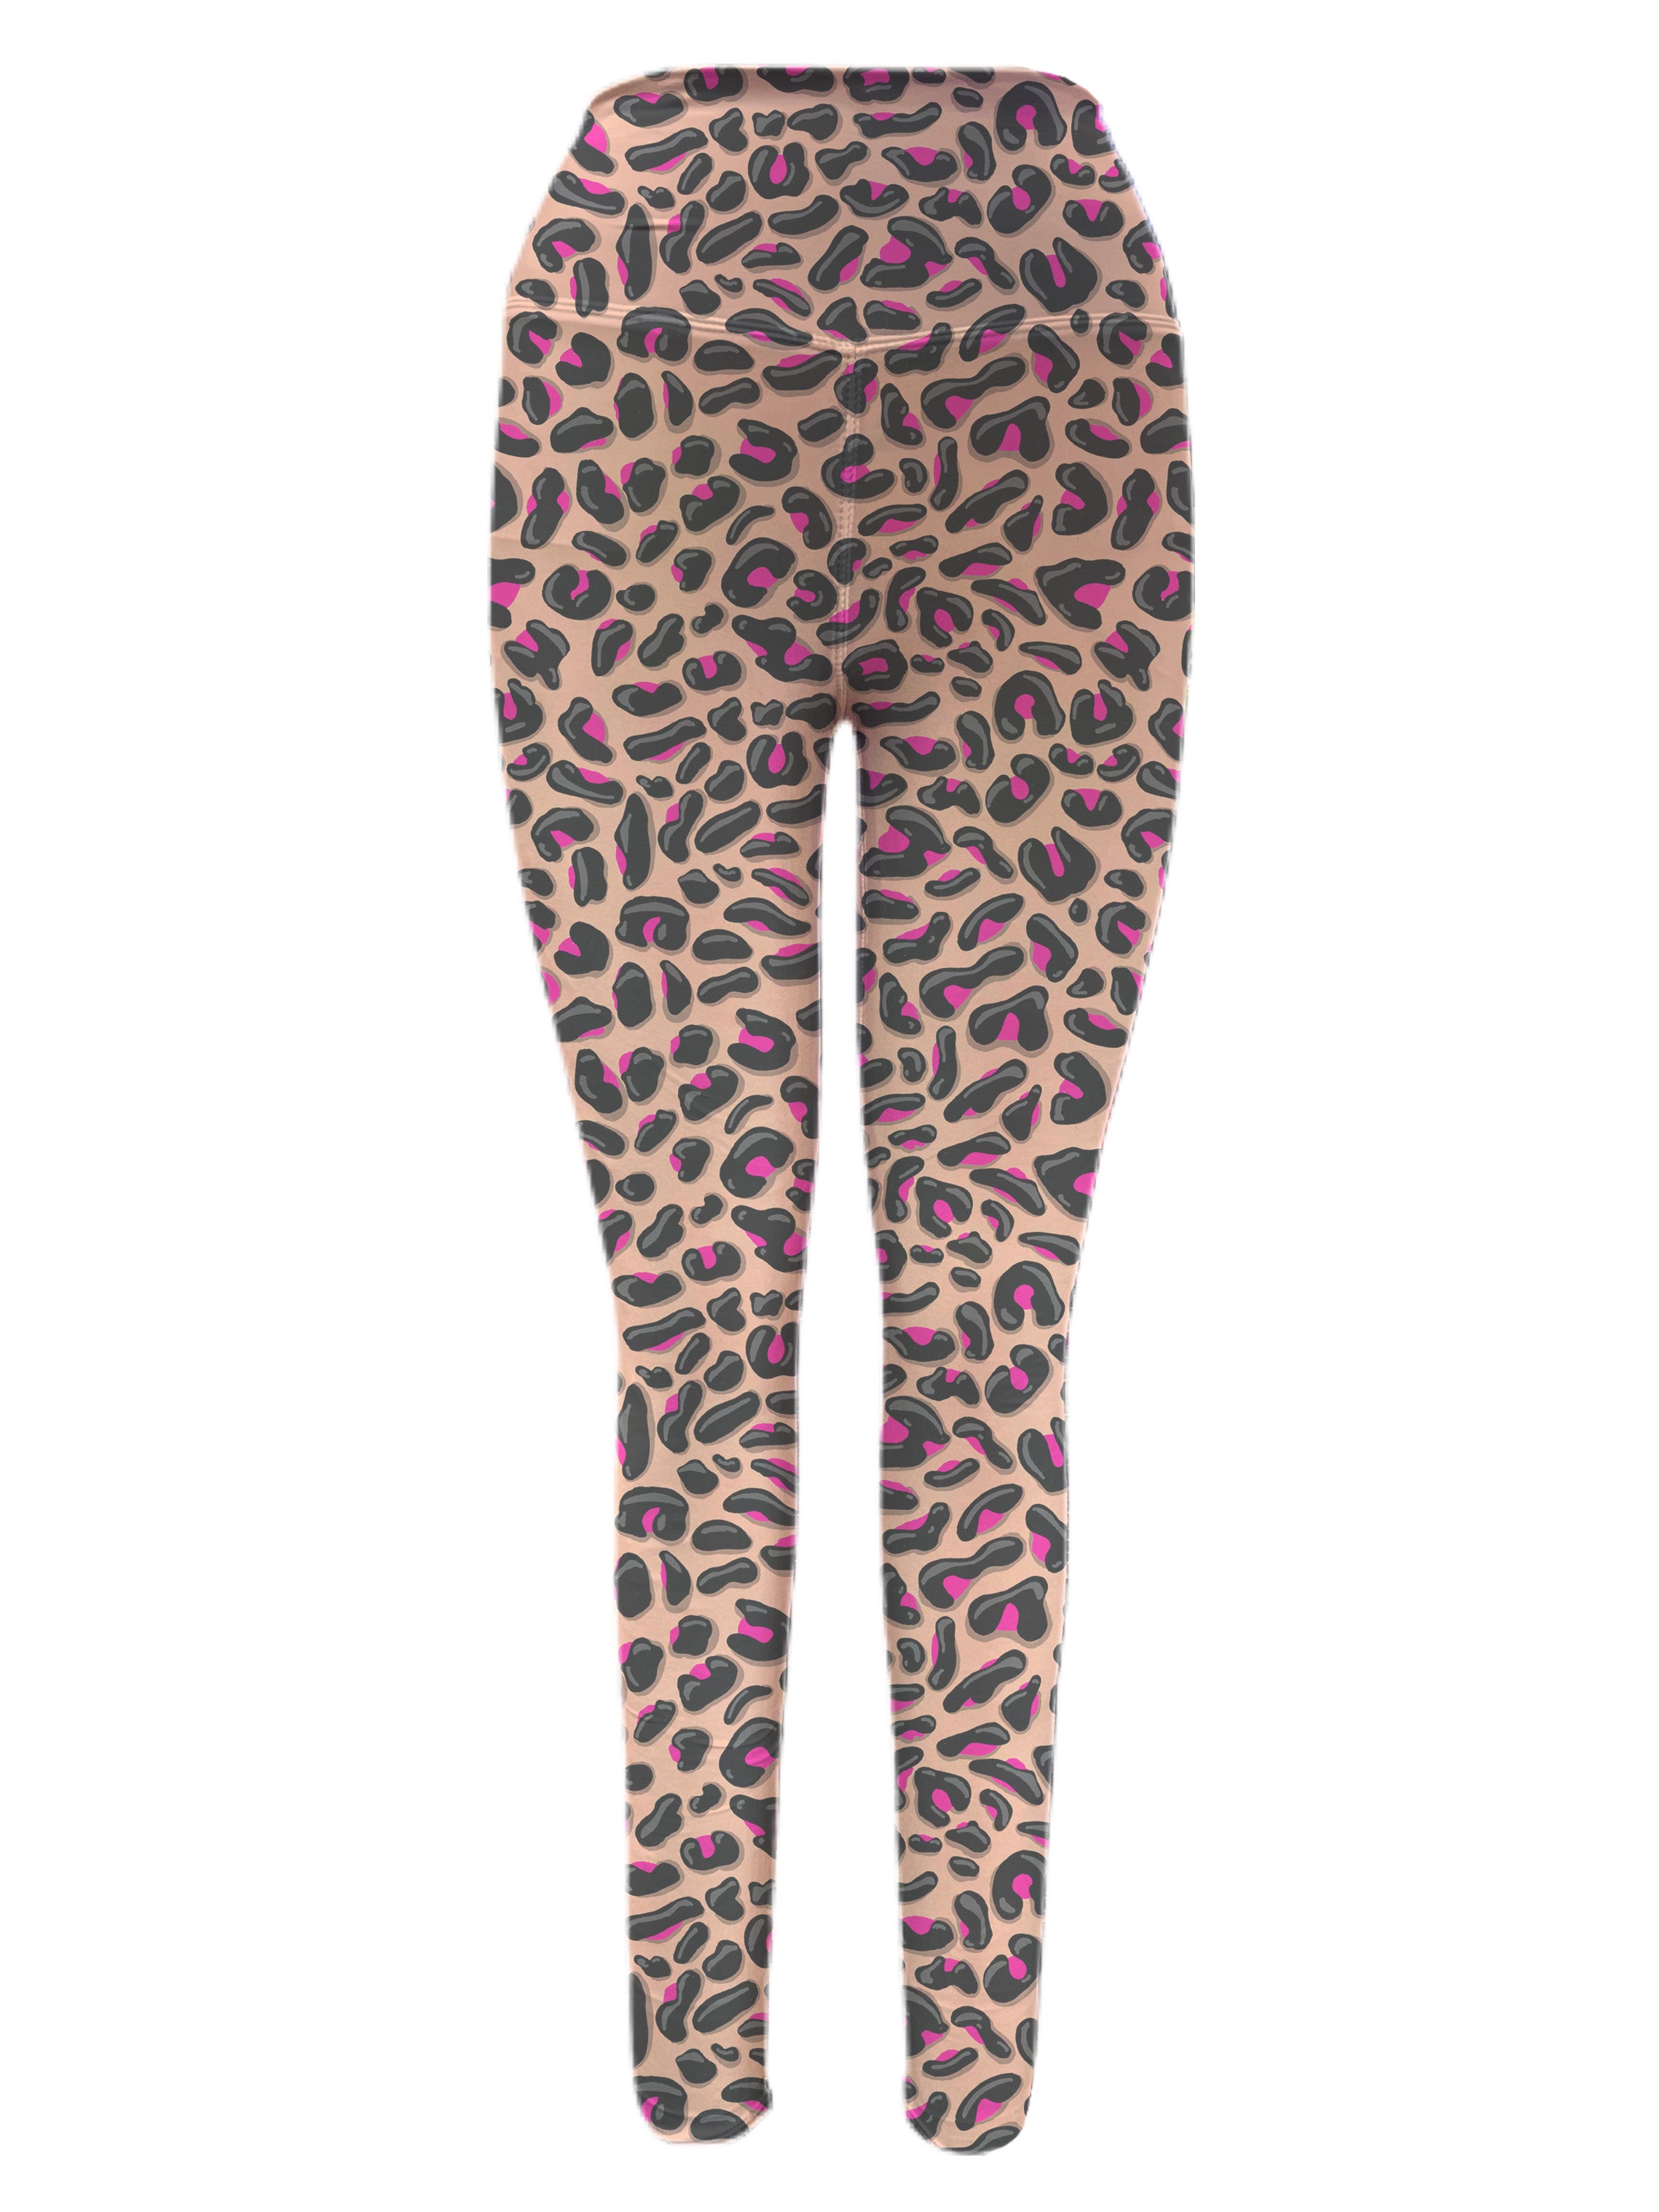 Pink Poozzy Leopard Print Leggings Pink Animal Print Leggings Yoga